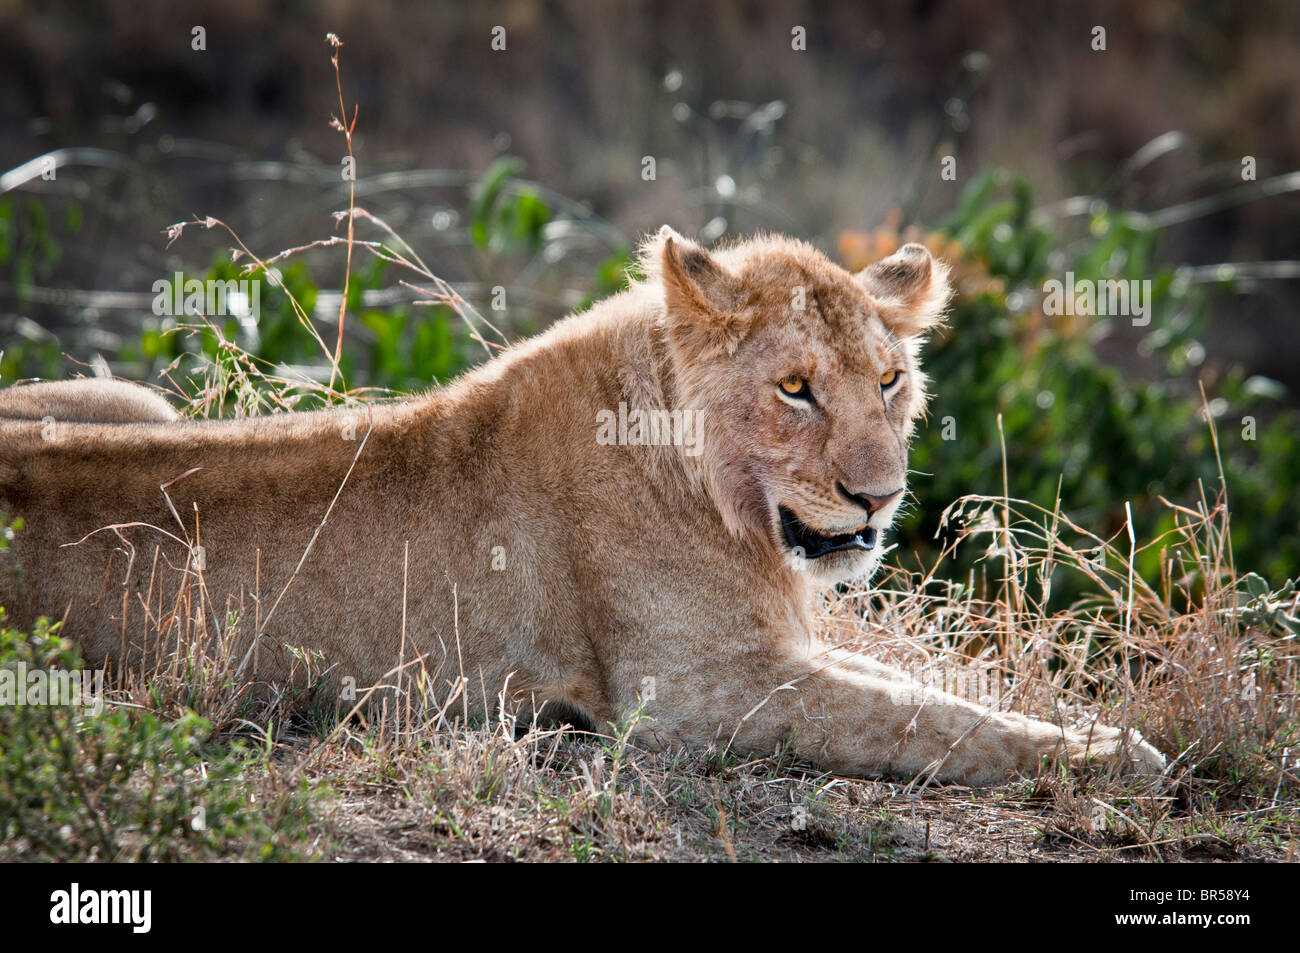 Young male Lion, Panthera leo, Masai Mara National Reserve, Kenya, Africa Banque D'Images